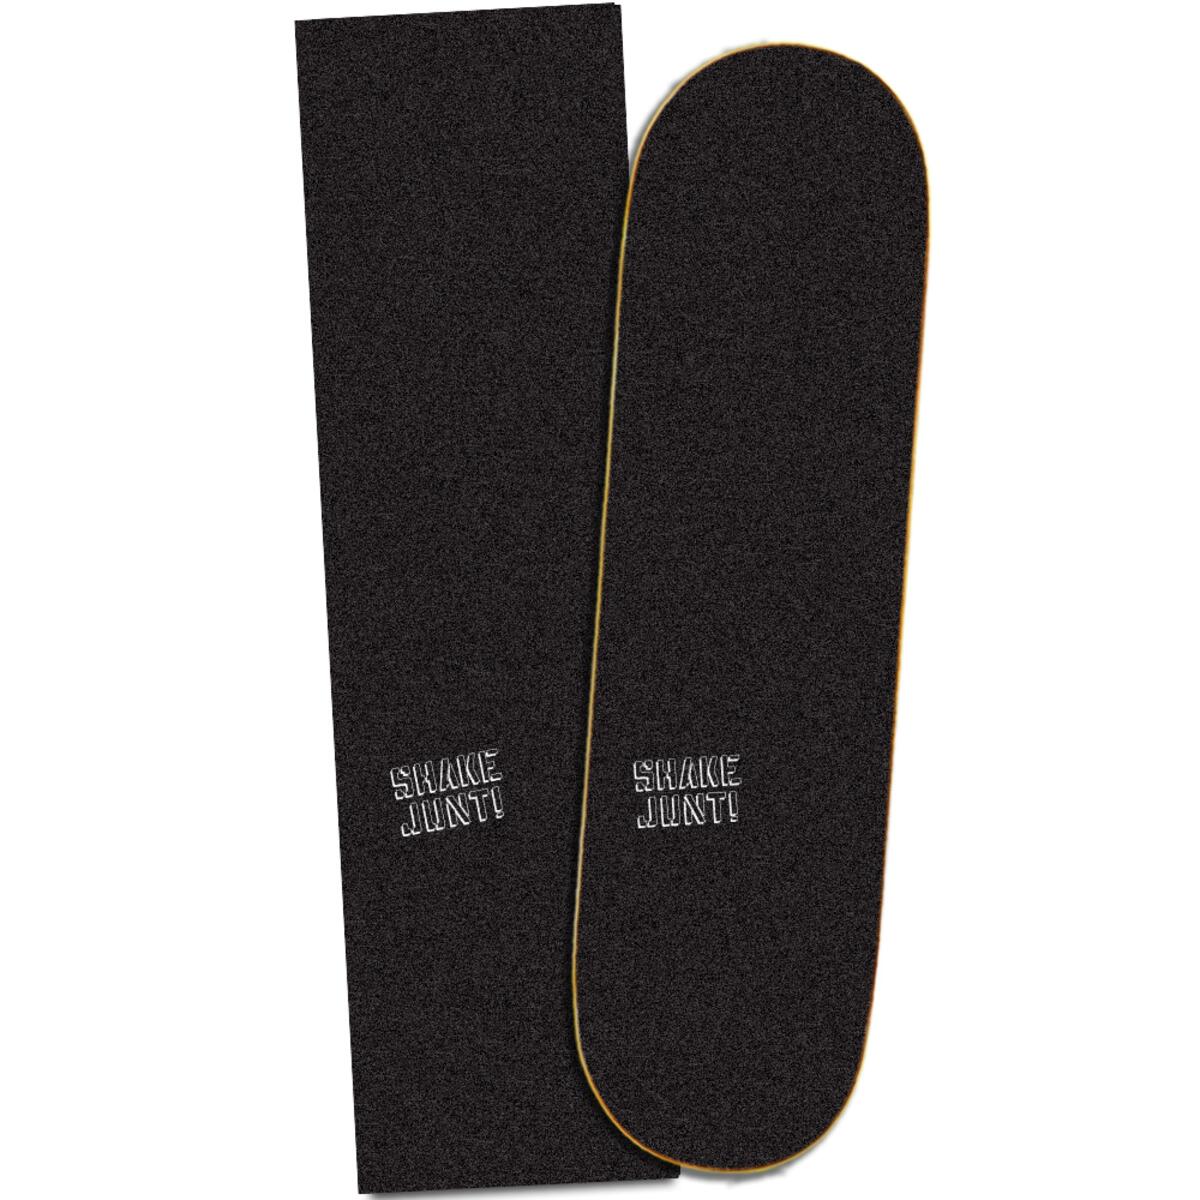 Shake Junt Lo Key Skateboard Grip Tape - Black/White